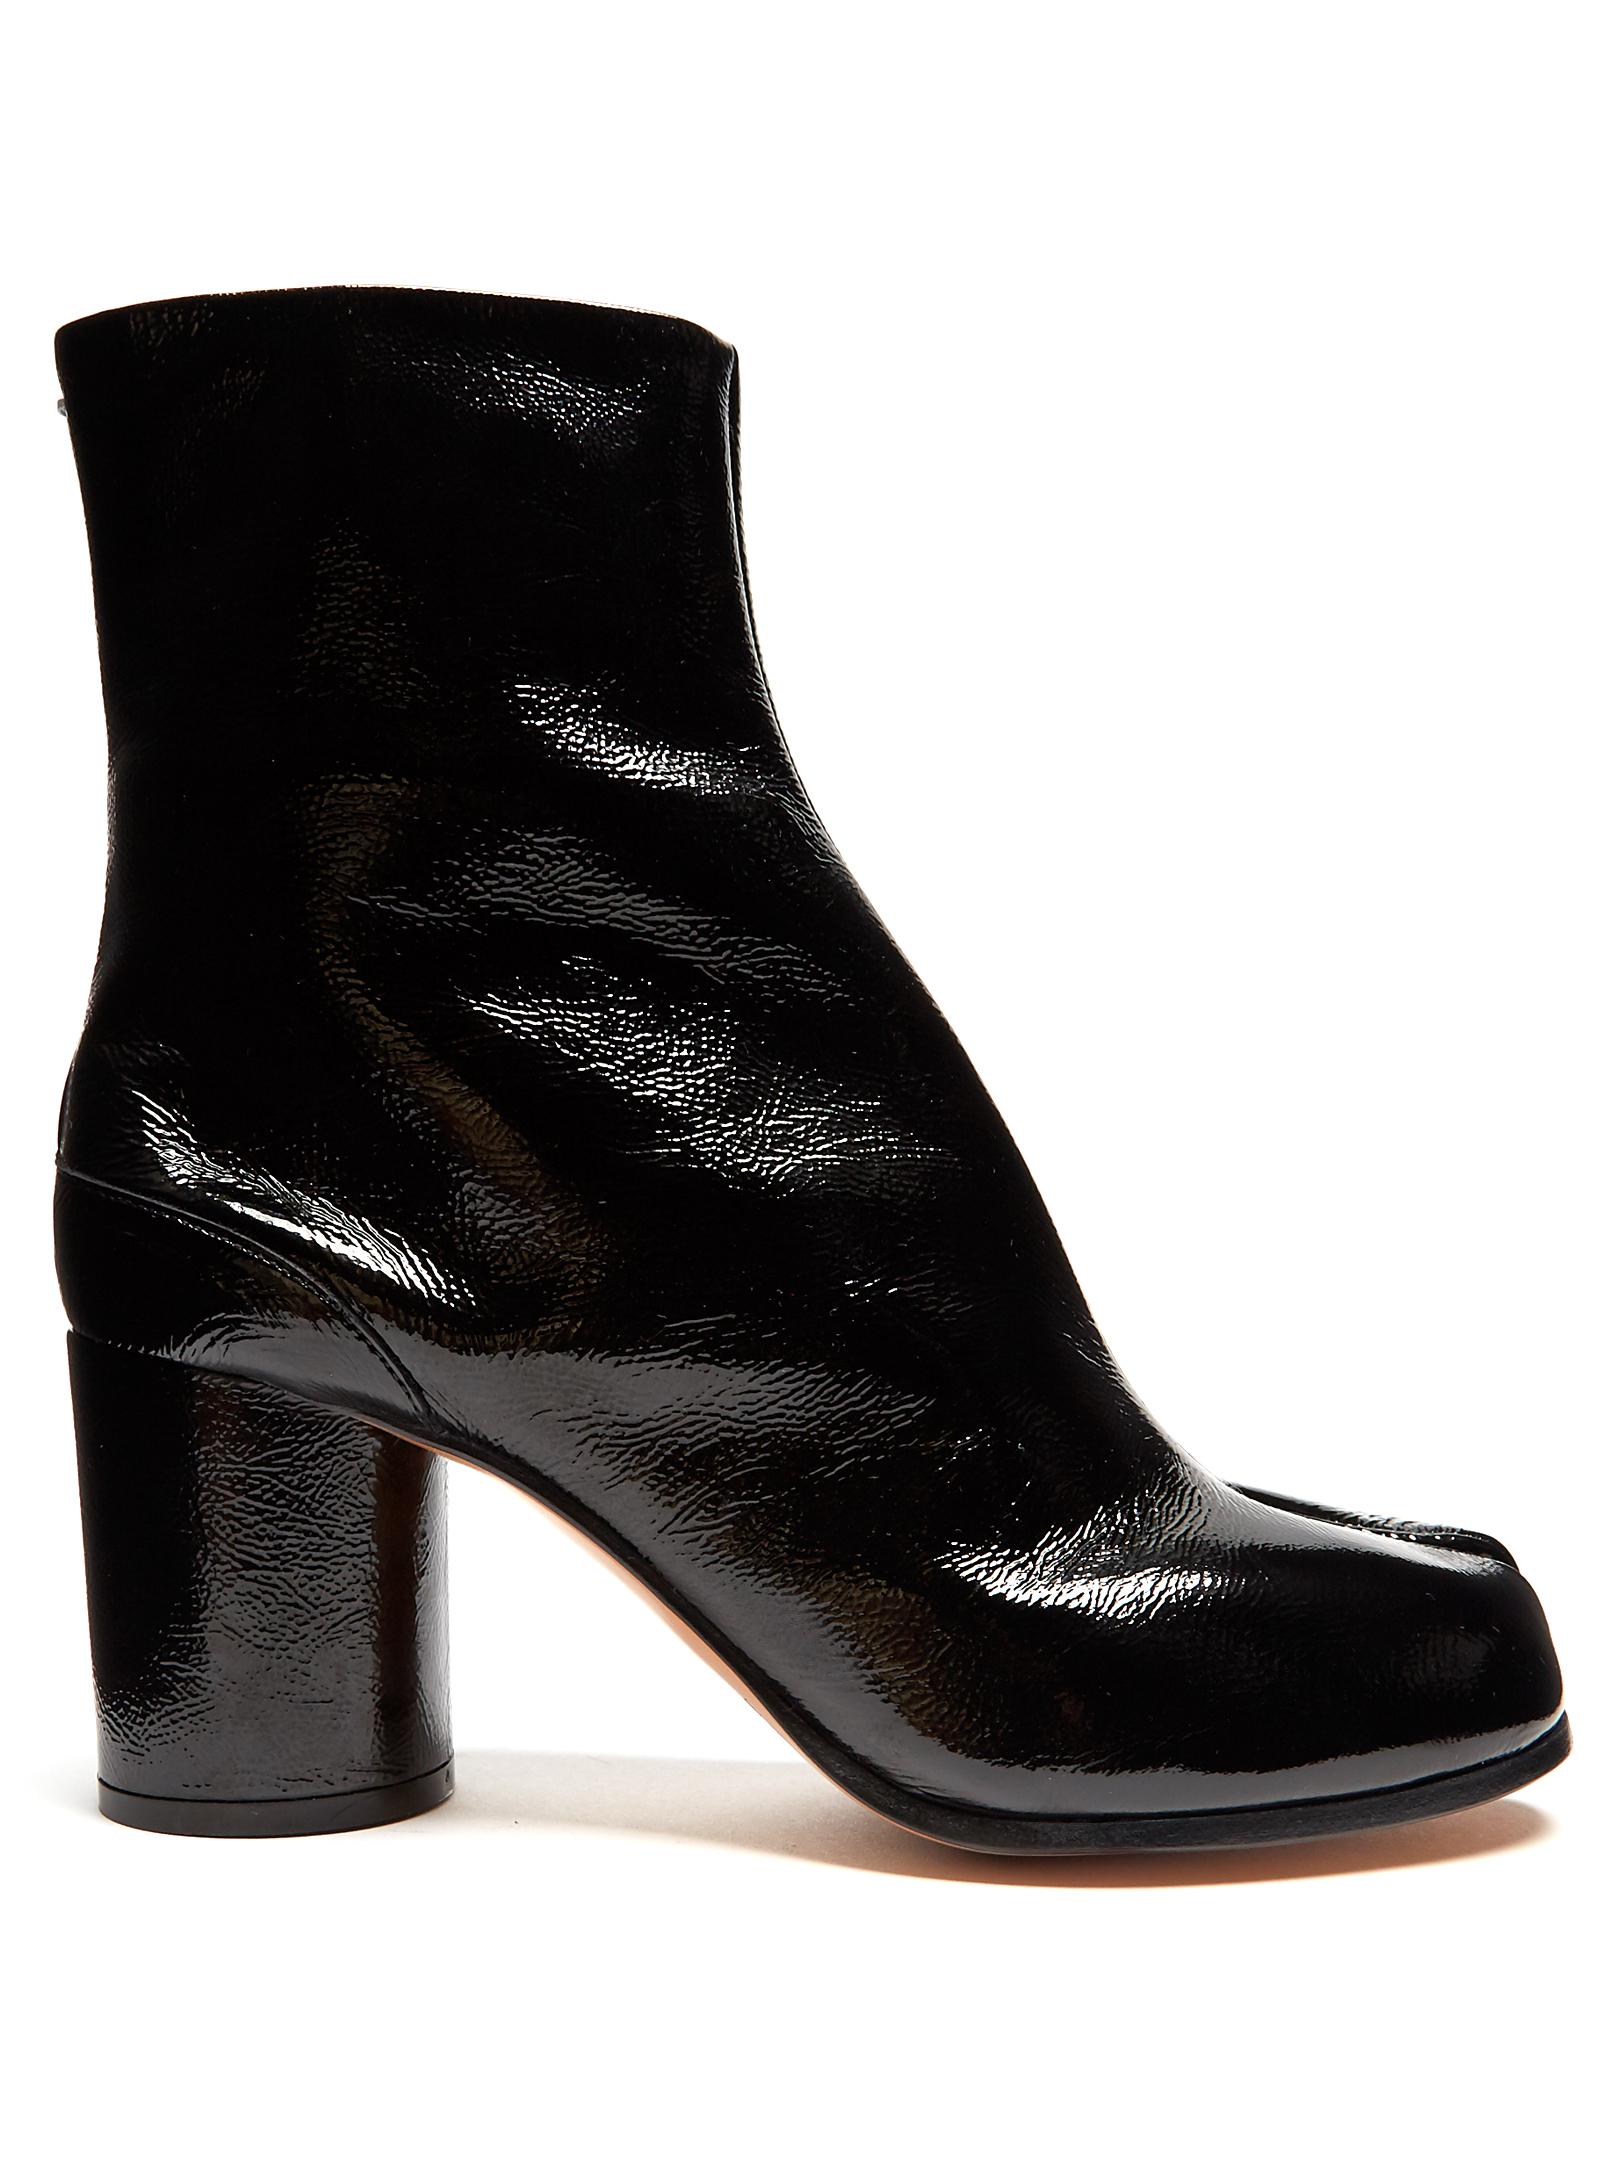 Maison Margiela Tabi Split-toe Patent-leather Ankle Boots in Black - Lyst